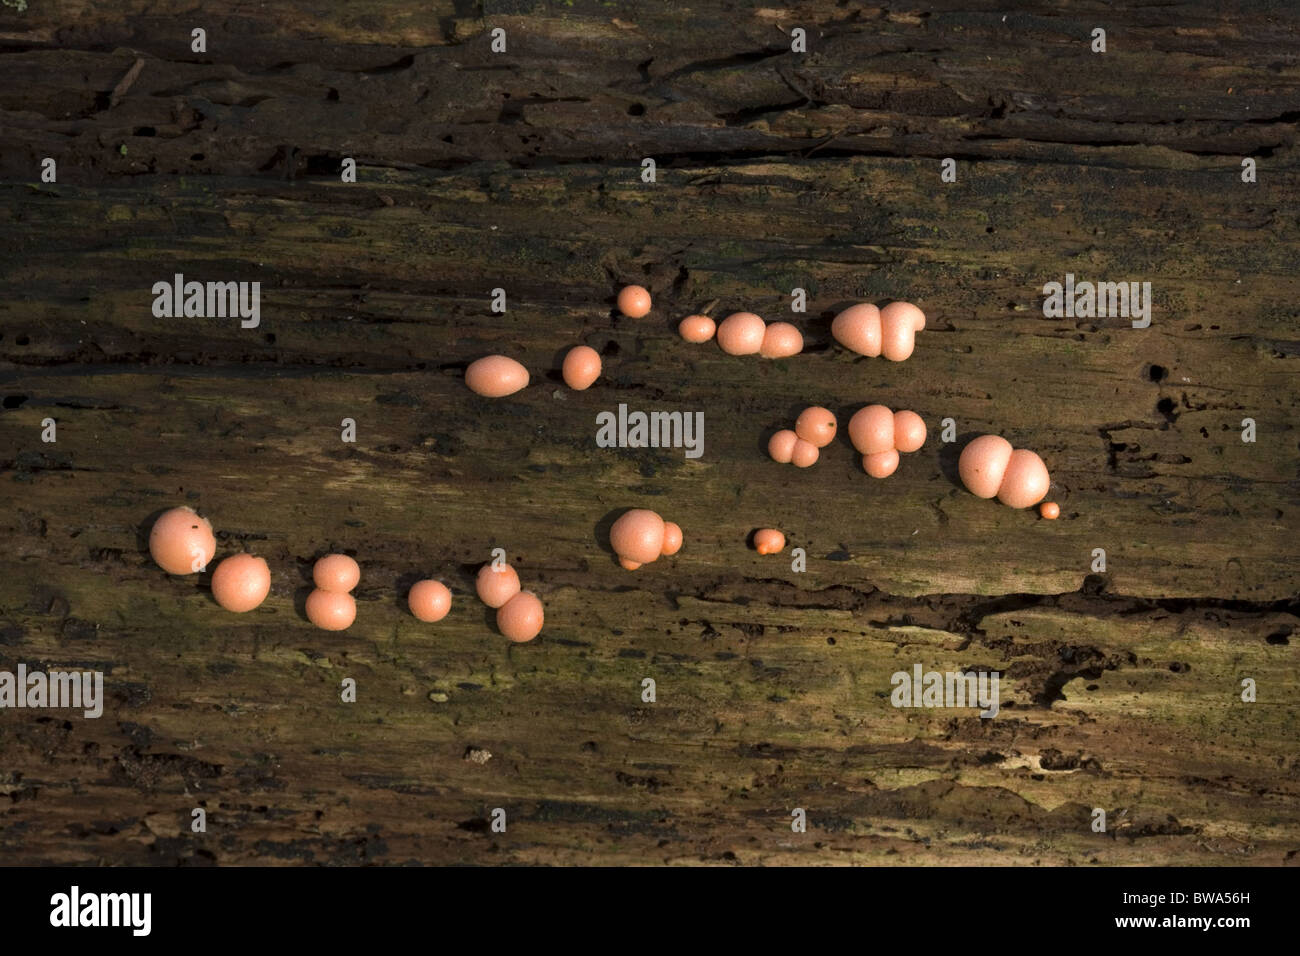 Orange stage of the plasmodial slime mould Wolf's Milk (Lycogala epidendrum) on dead wood, Alblasserdam, Netherlands Stock Photo